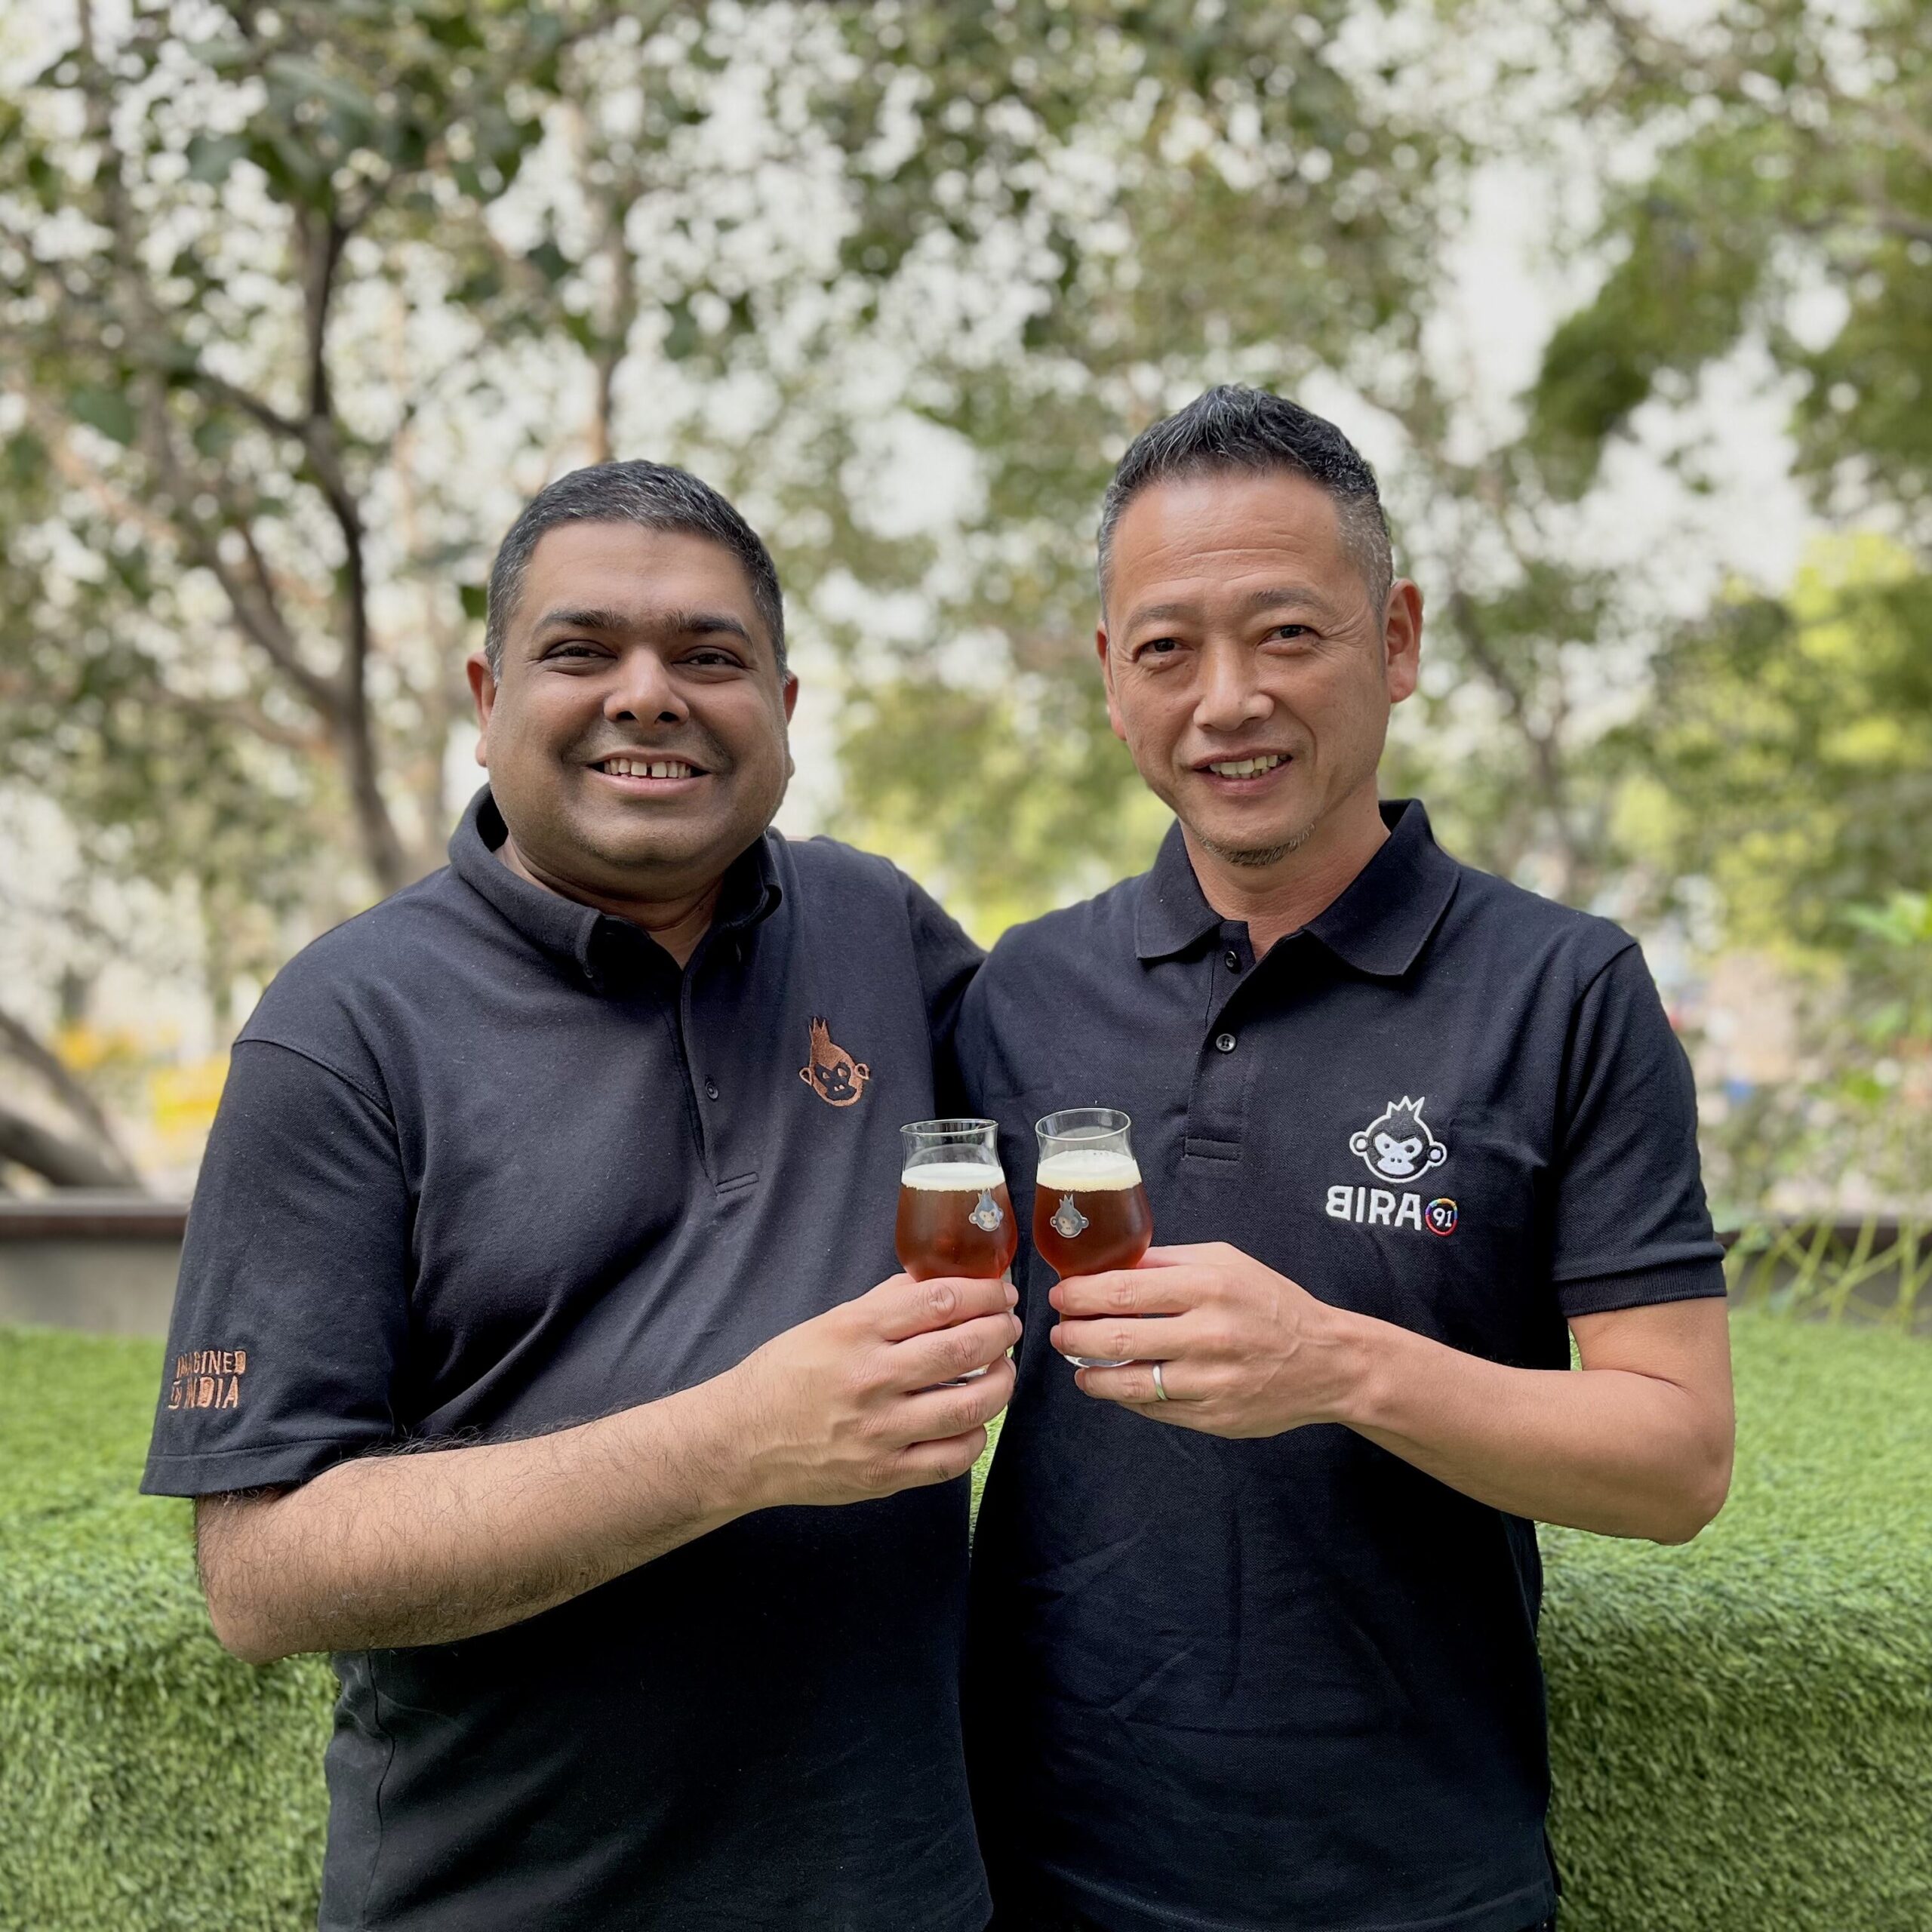 Bira 91 raises USD 70 million in Series D funding from leading Japanese beer company Kirin Holdings